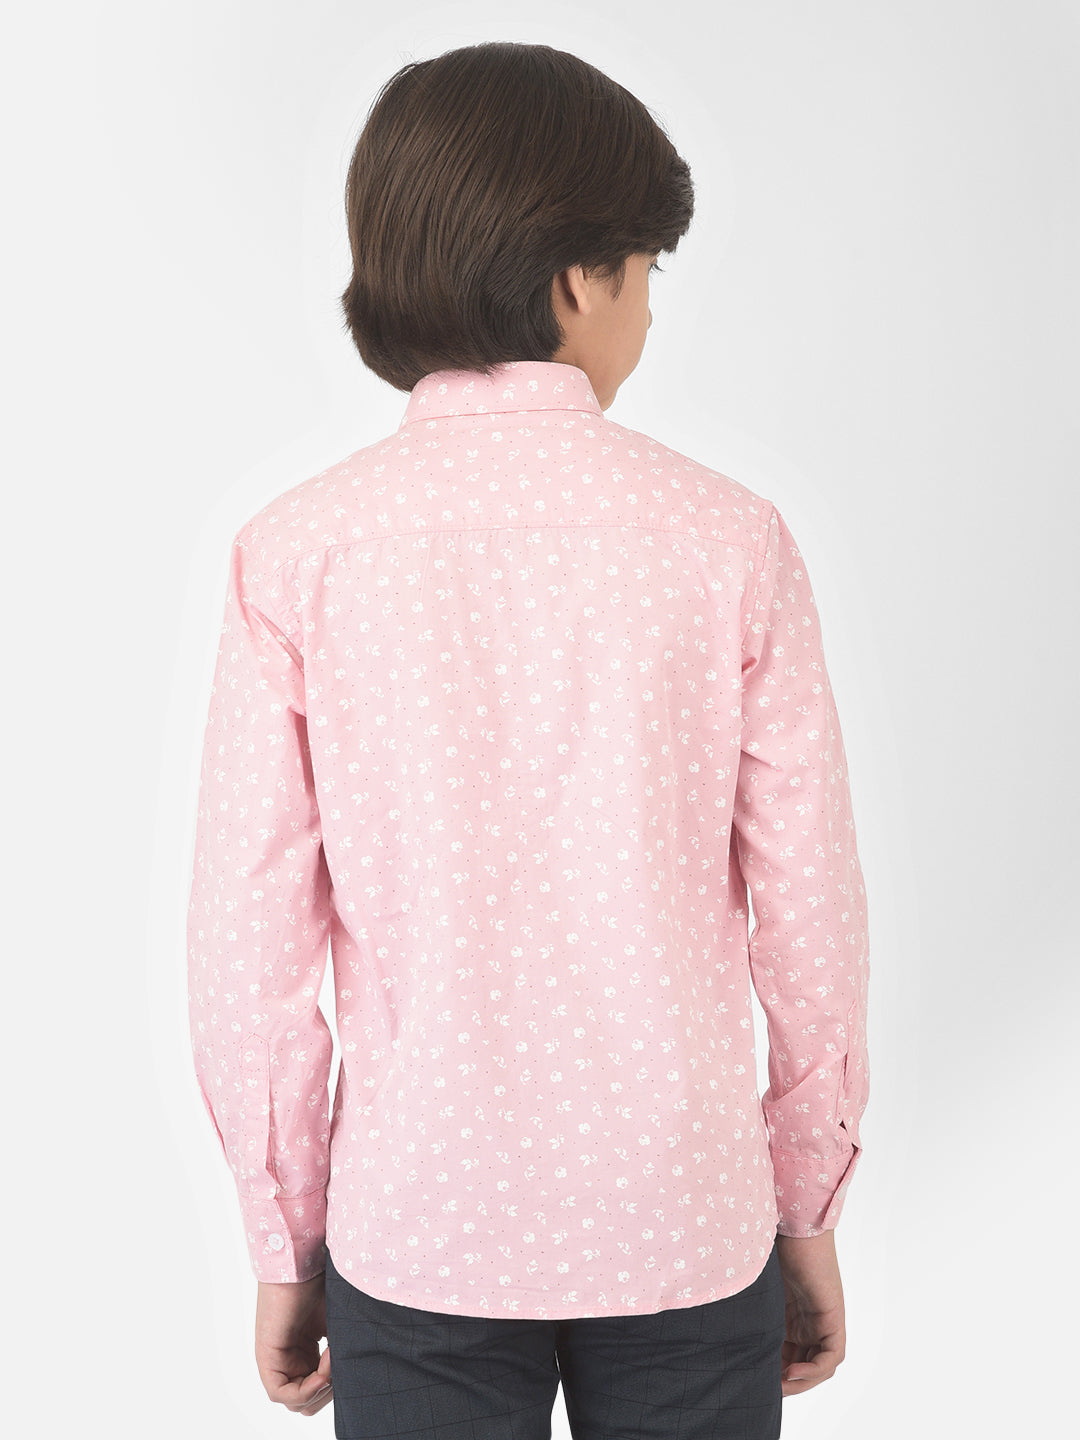 Pink Floral Printed Shirt - Boys Shirts